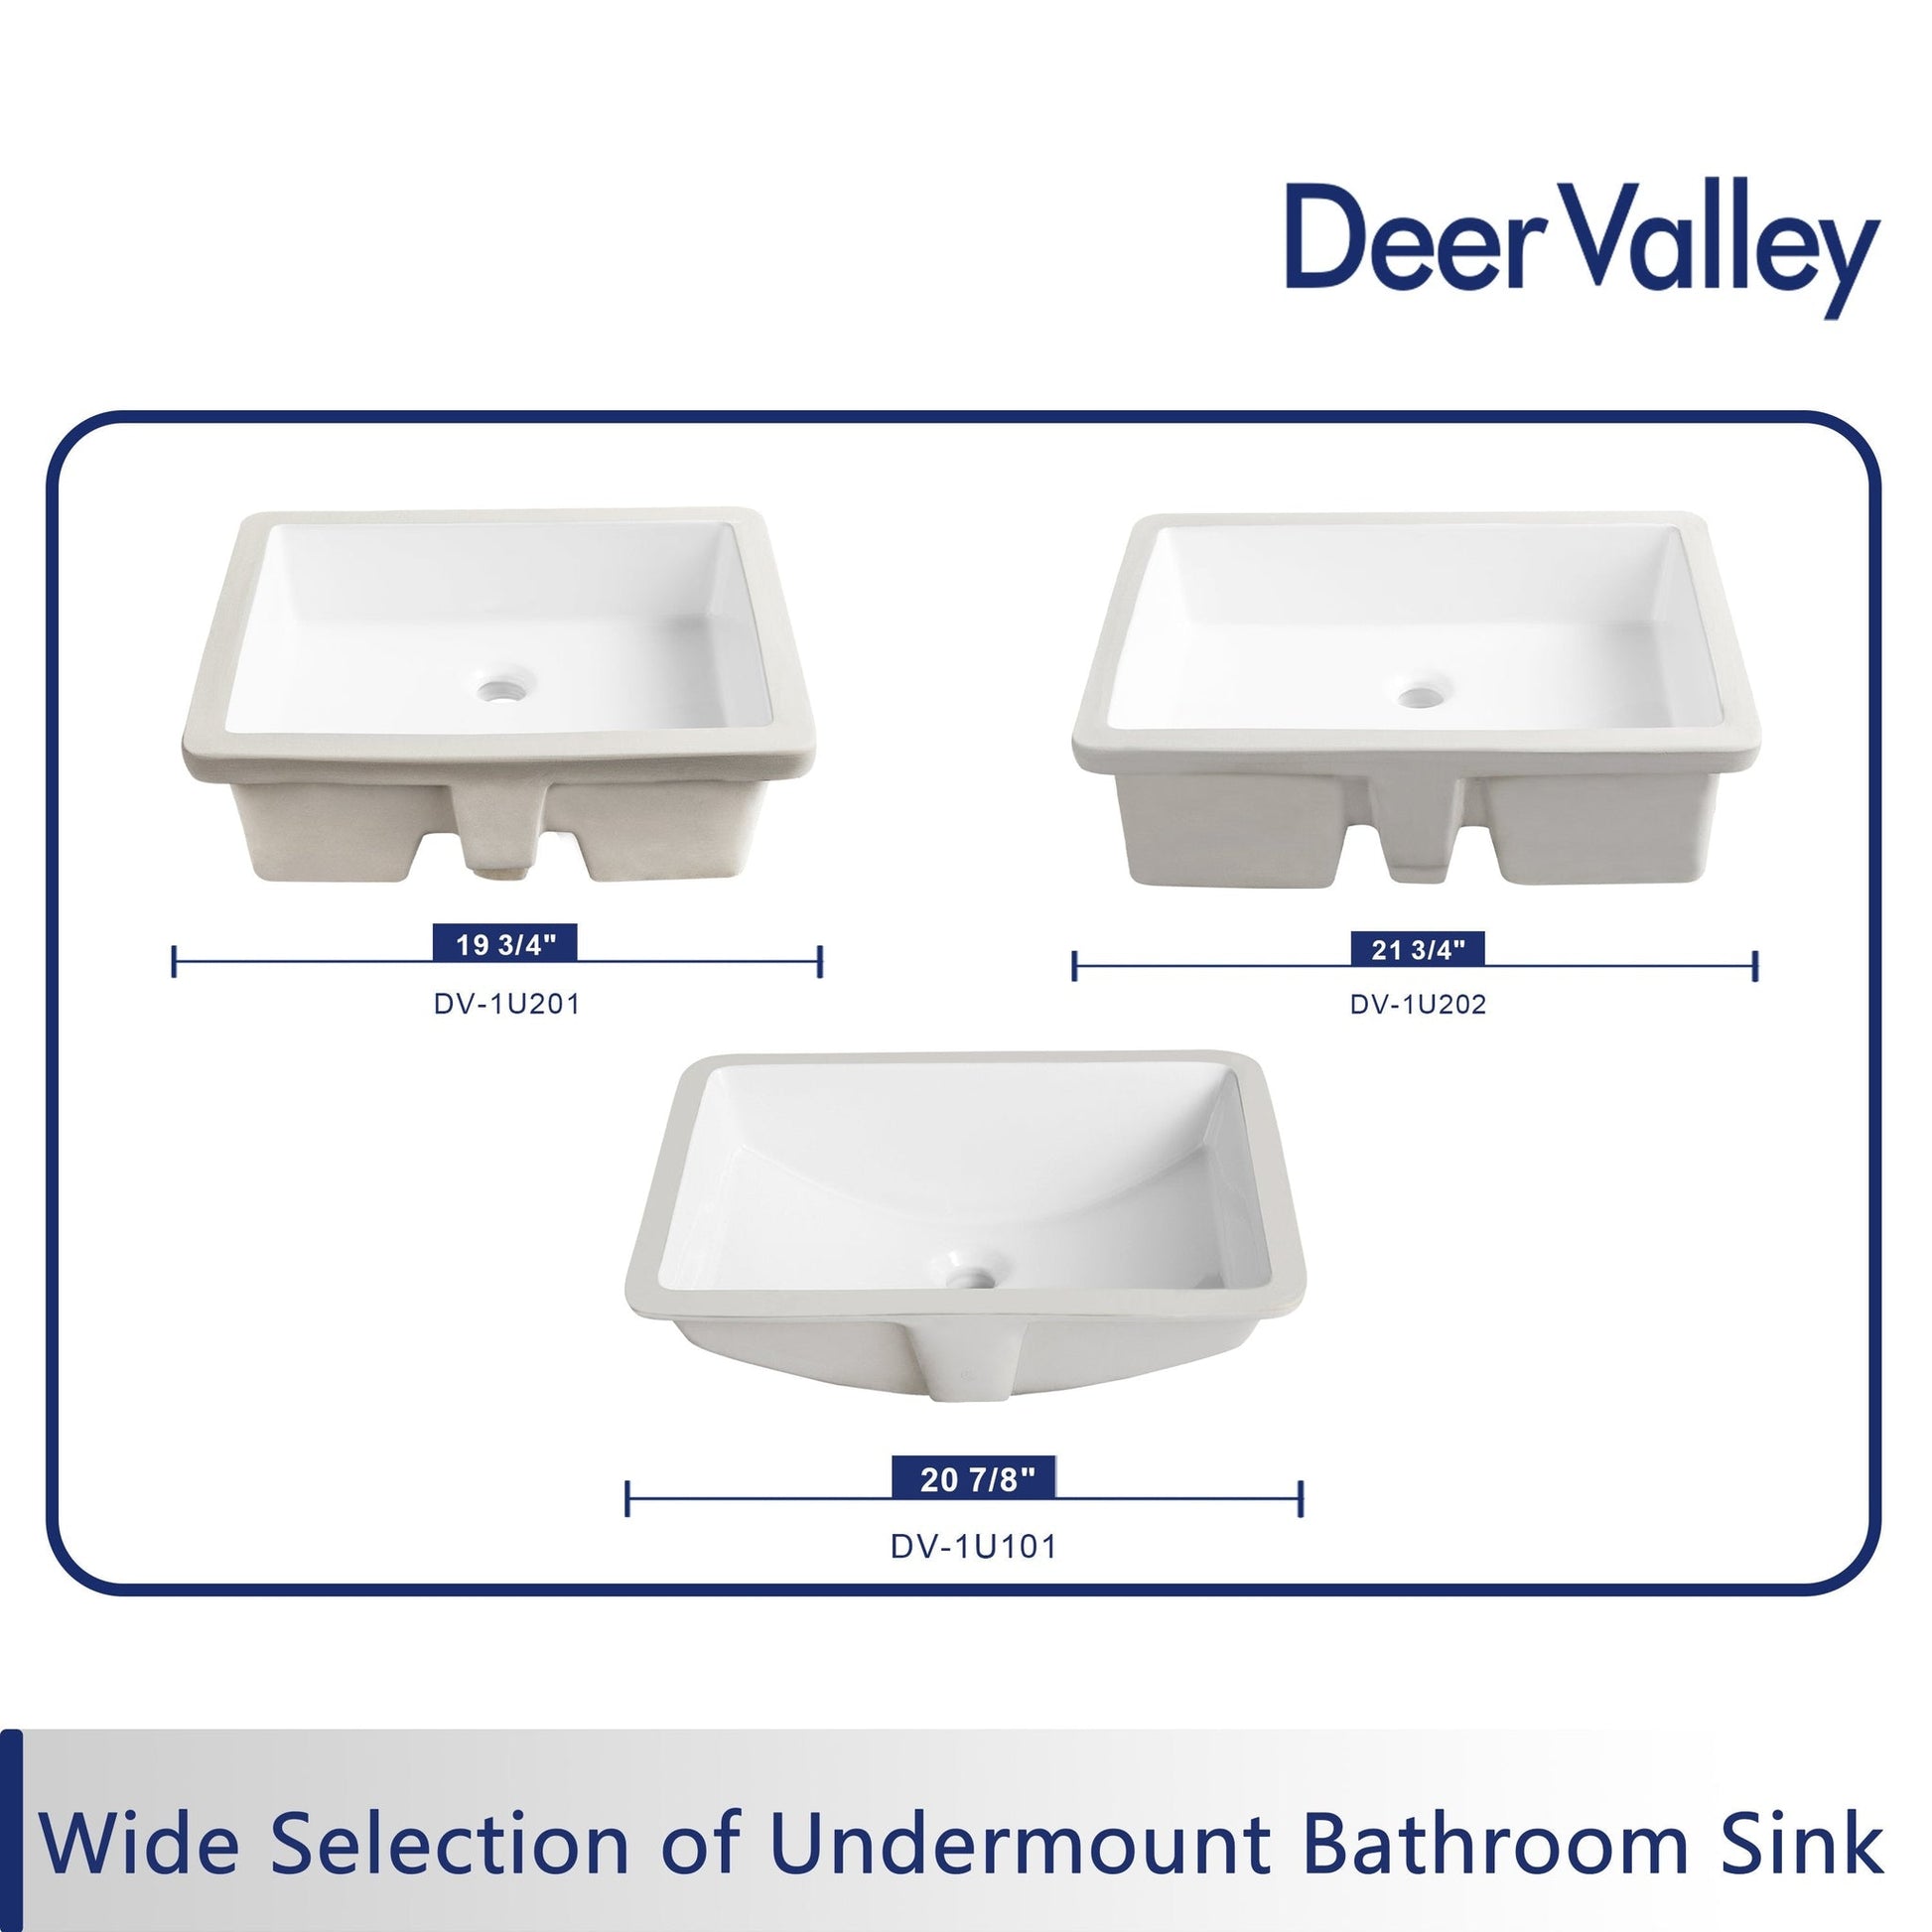 DeerValley Ally 21" x 15" Rectangular White Undermount Bathroom Sink With Overflow Hole